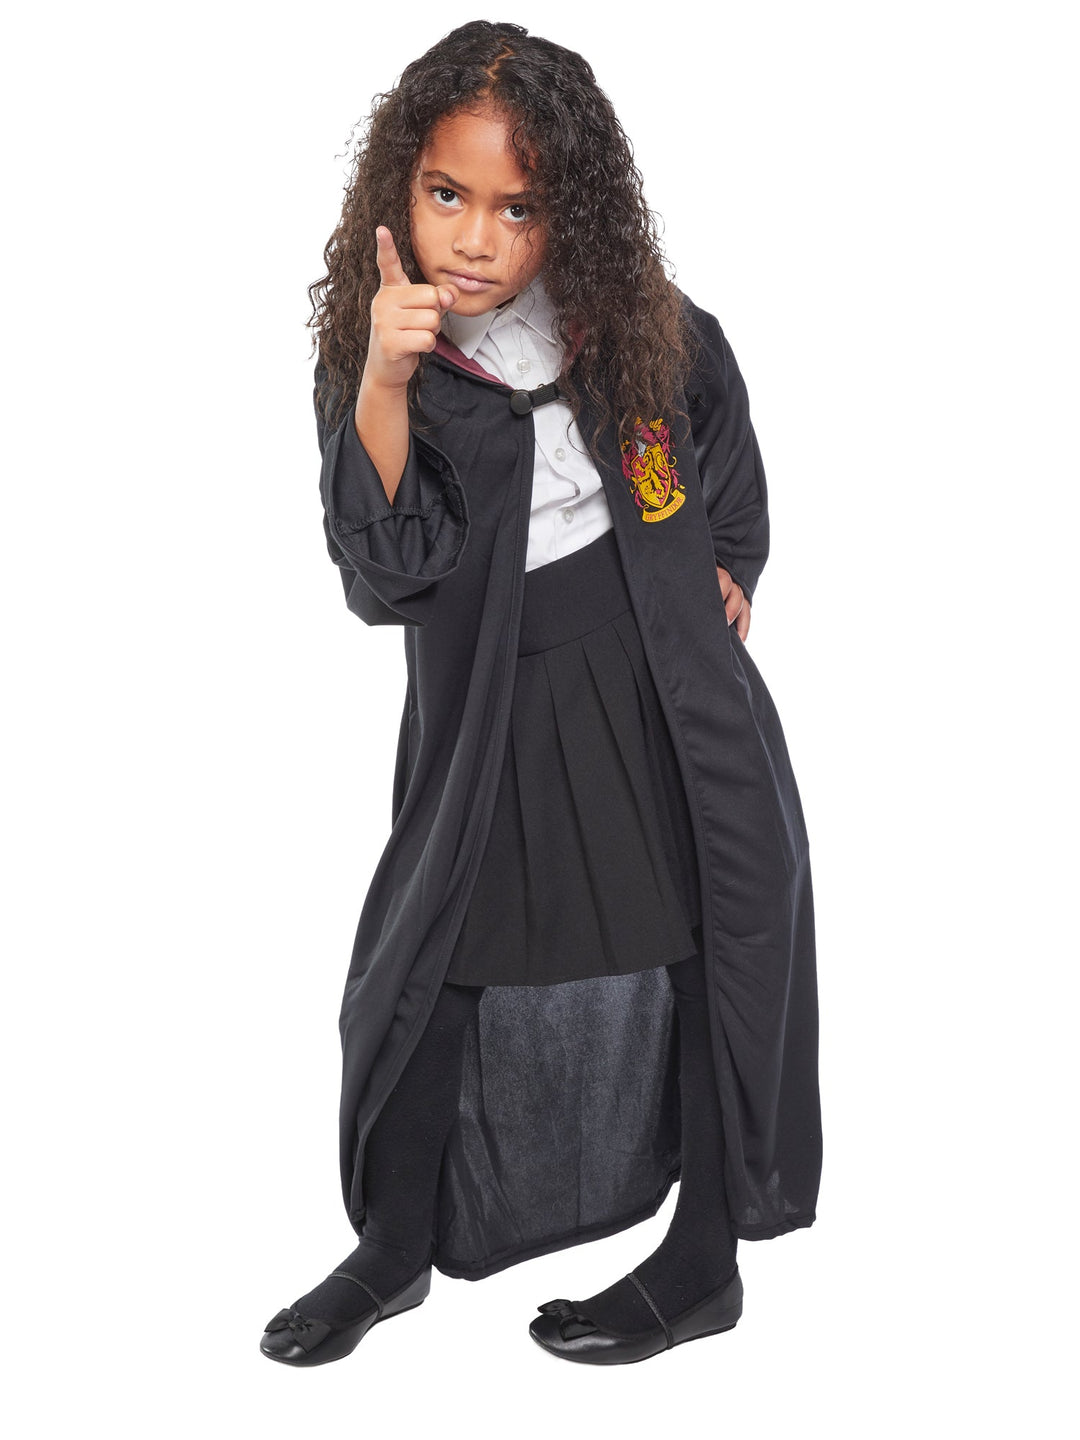 Gryffindor Robe for Kids Costume Harry Potter_4